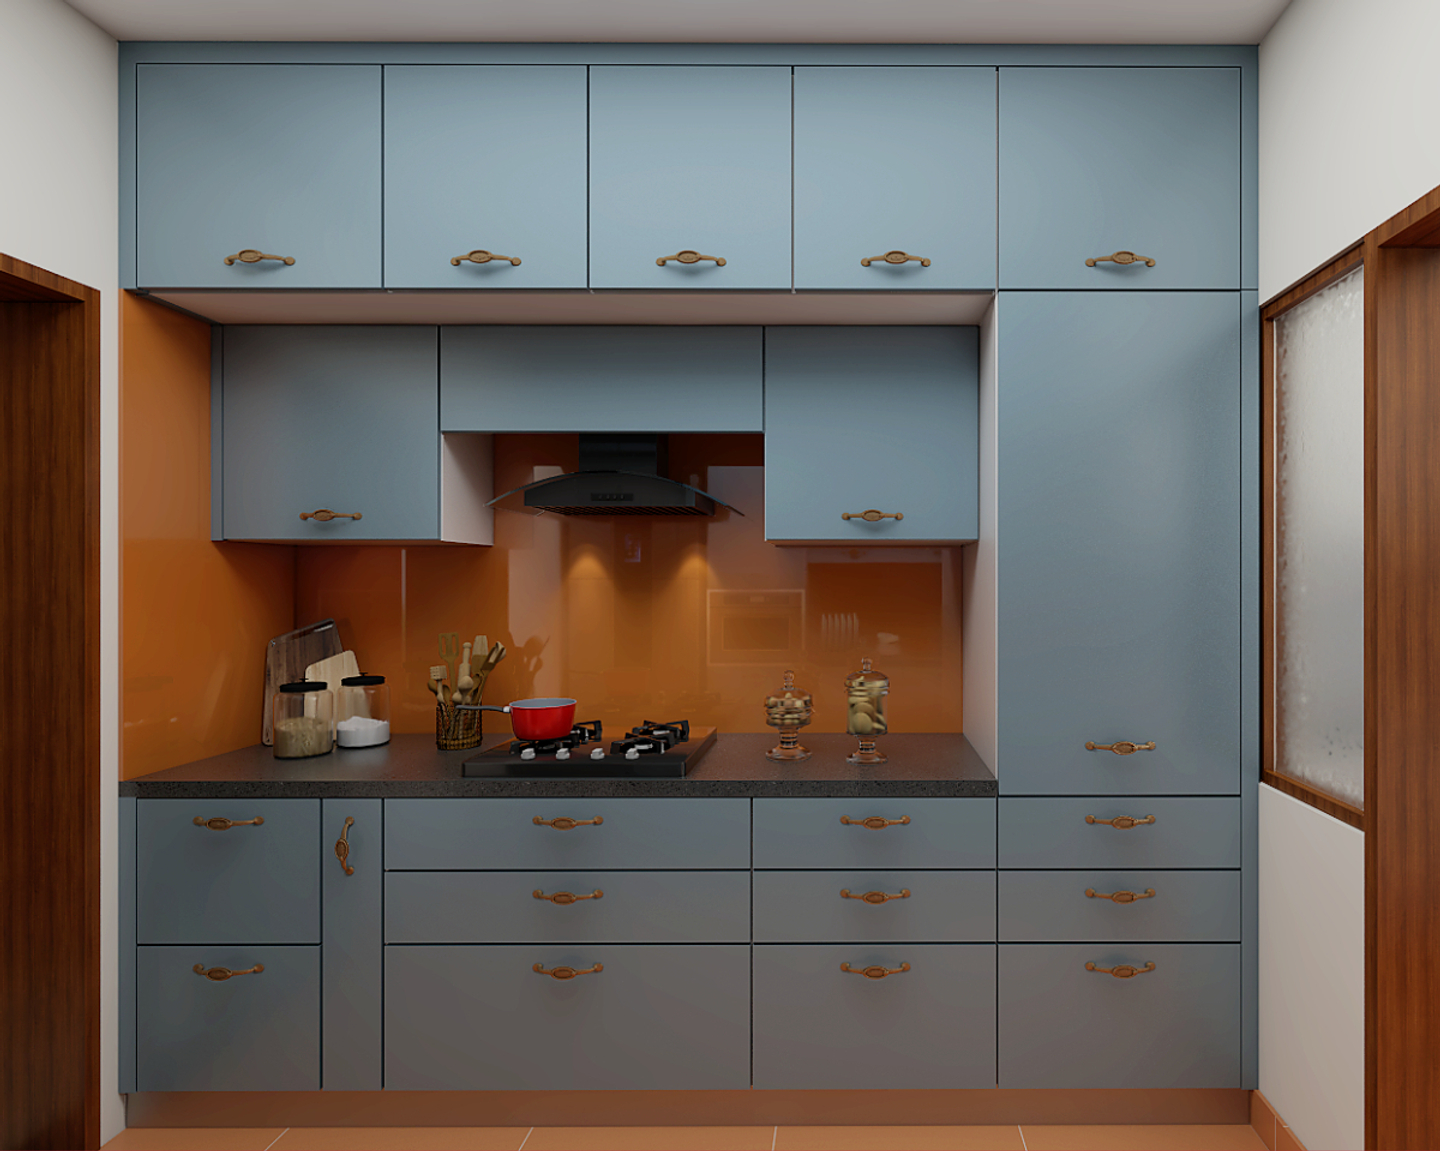 Parallel Blue Kitchen Design - Livspace